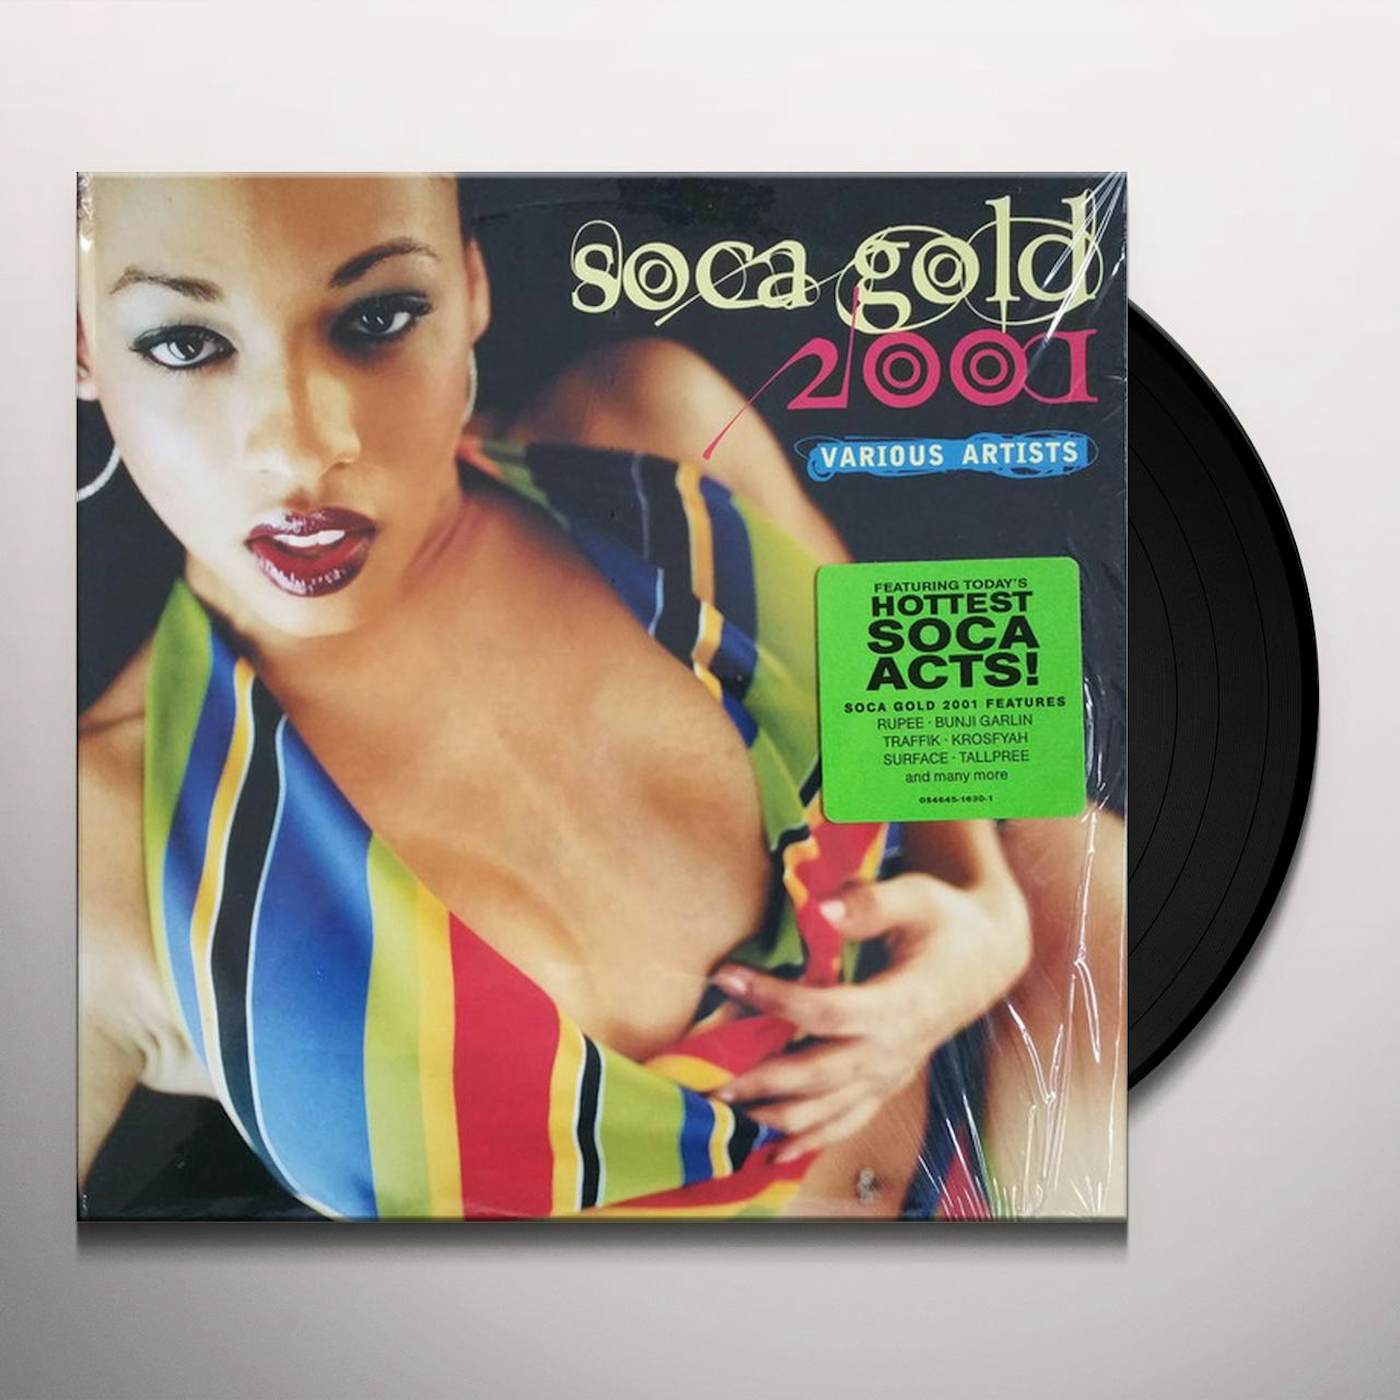 Soca Gold 2001 / Various